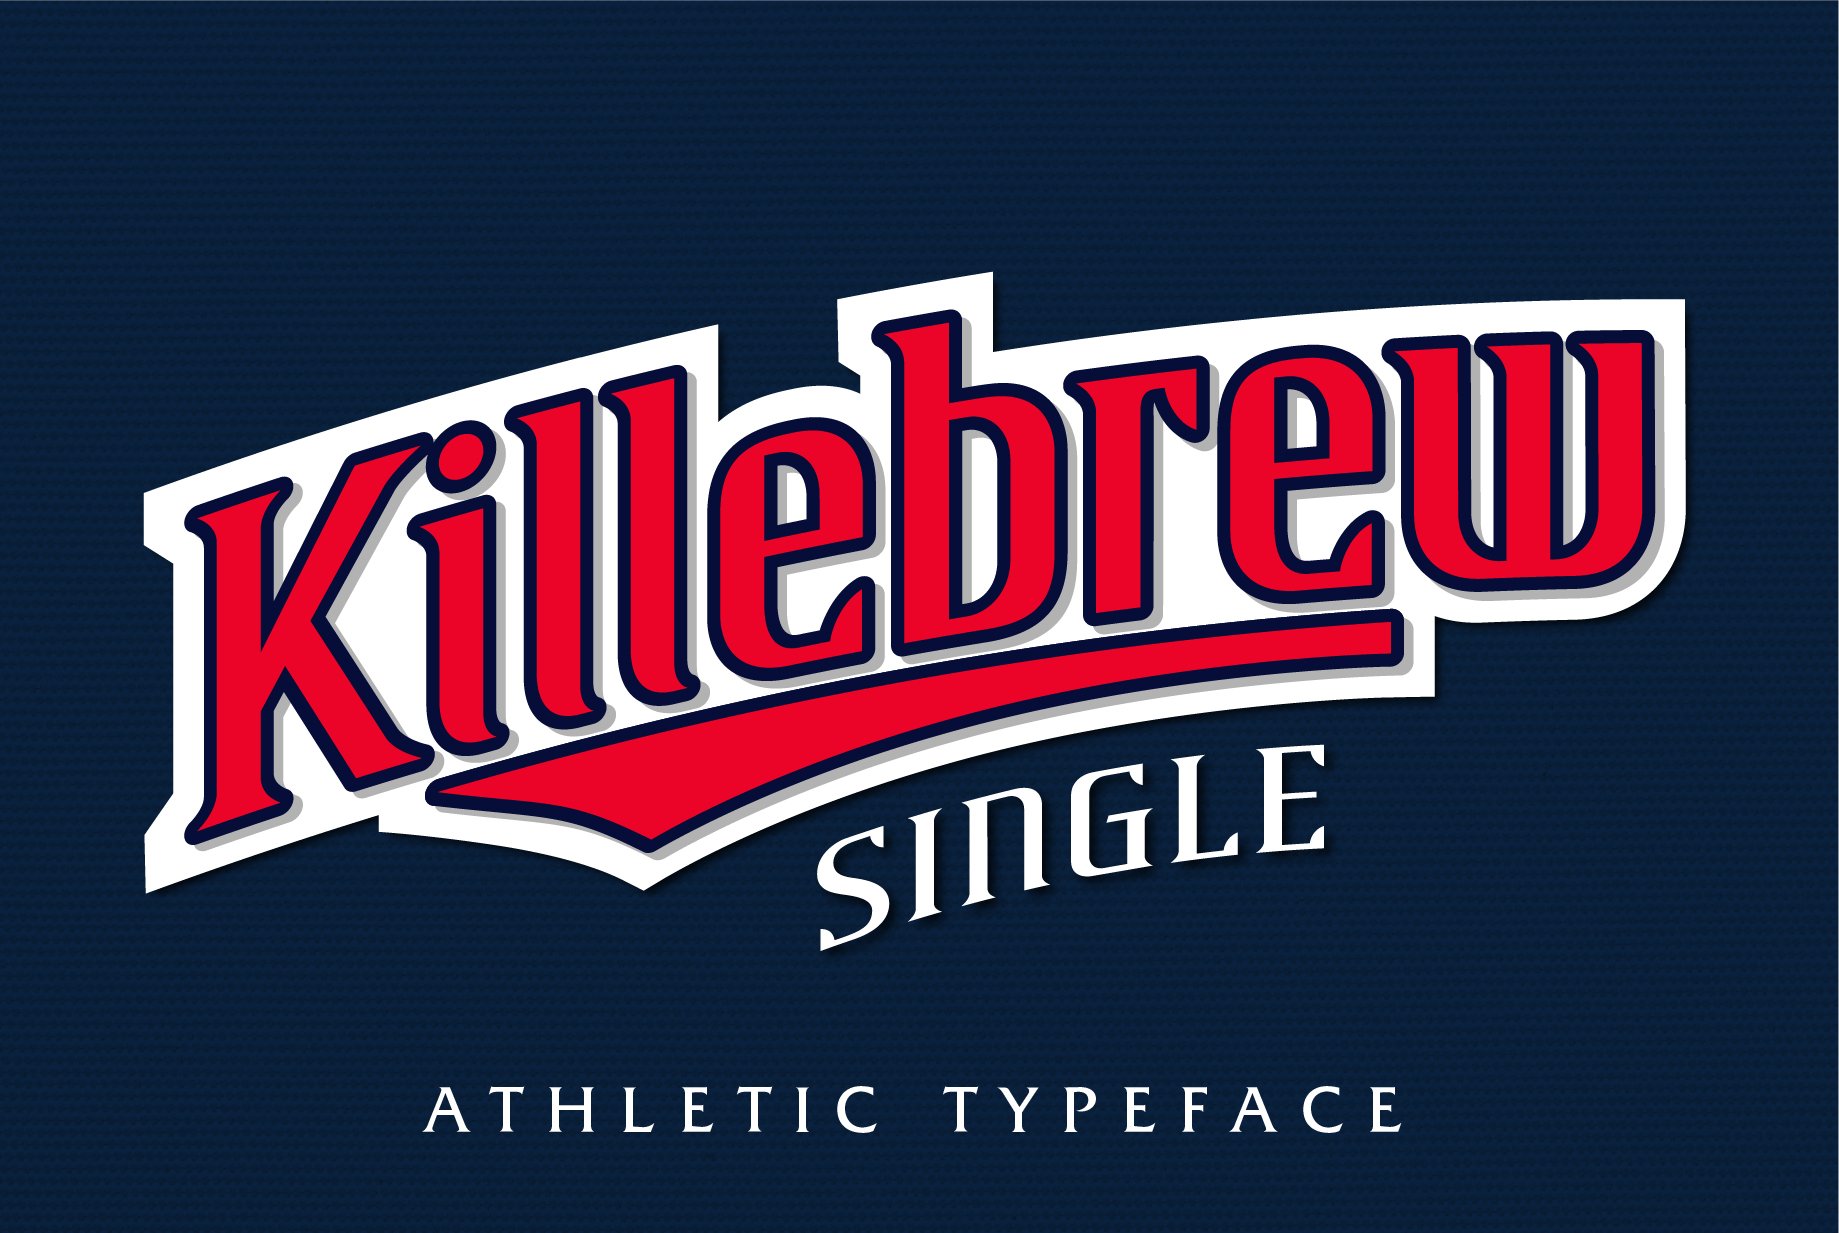 Killebrew Single | Athletic Typeface cover image.